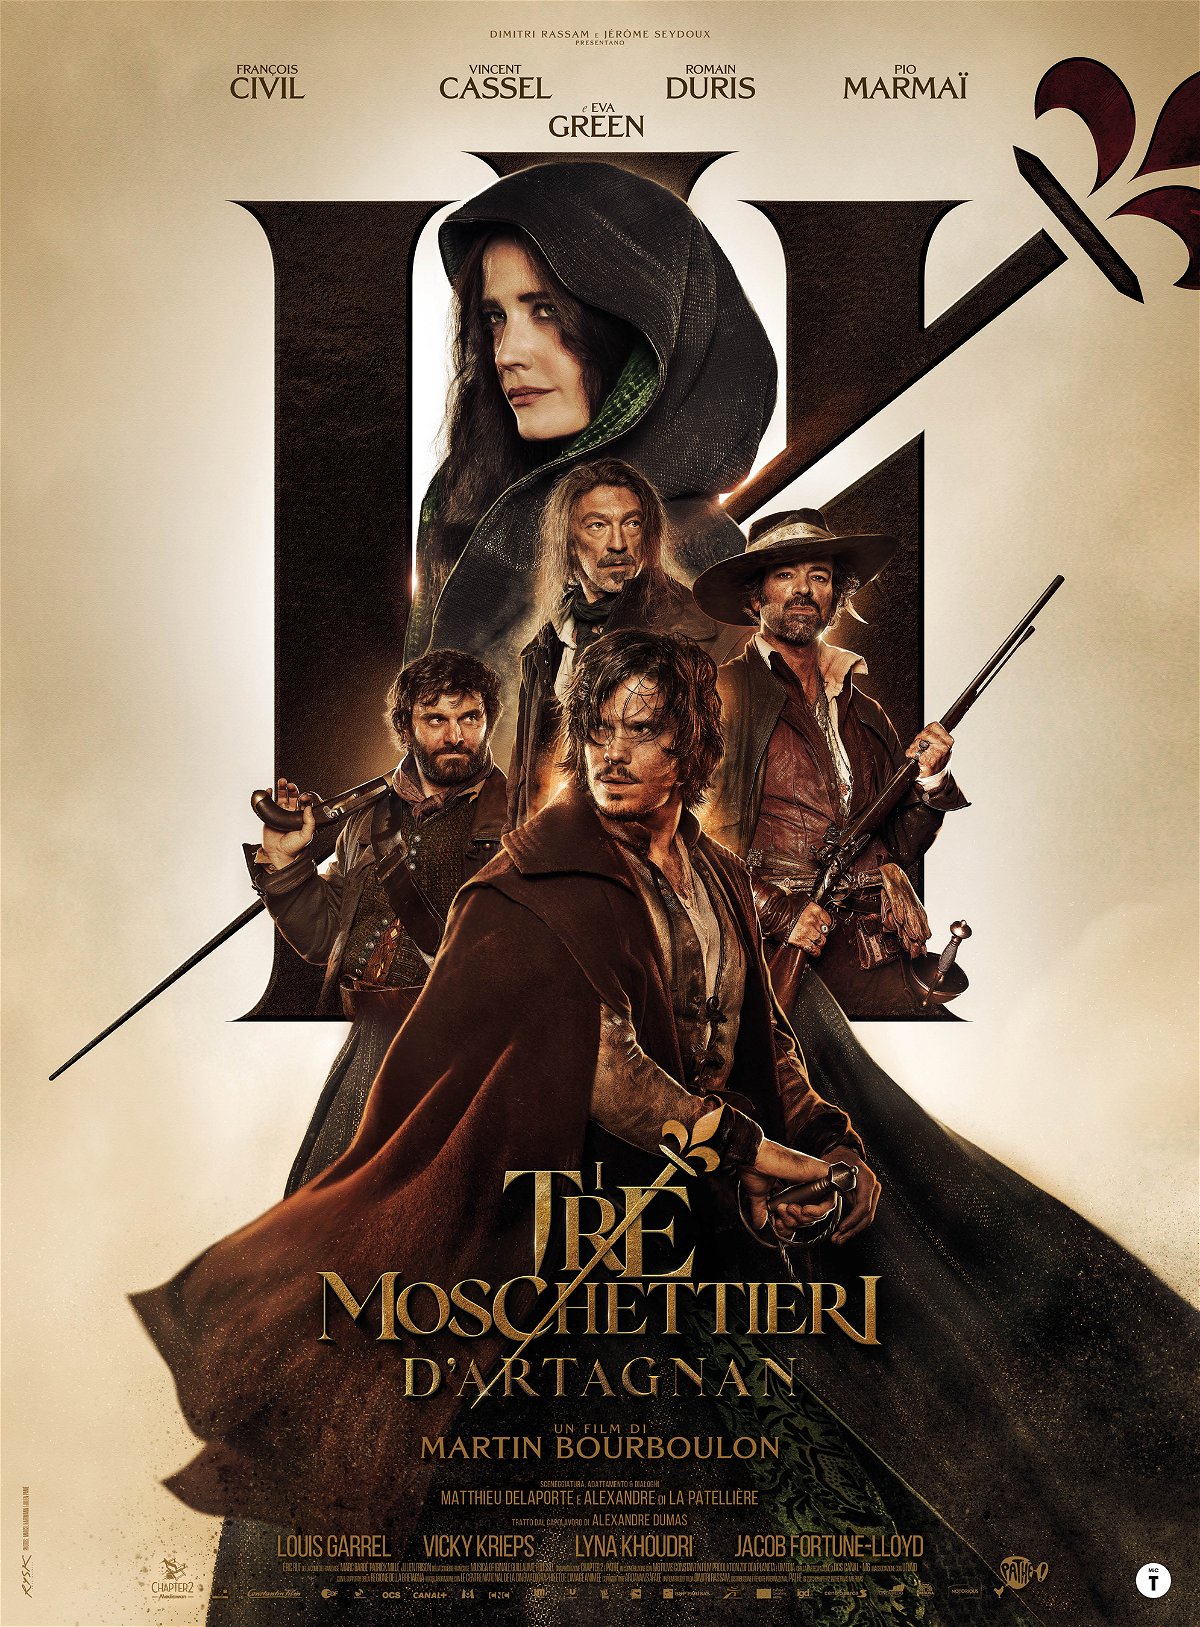 I Tre Moschettieri: D'Artagnan | Poster